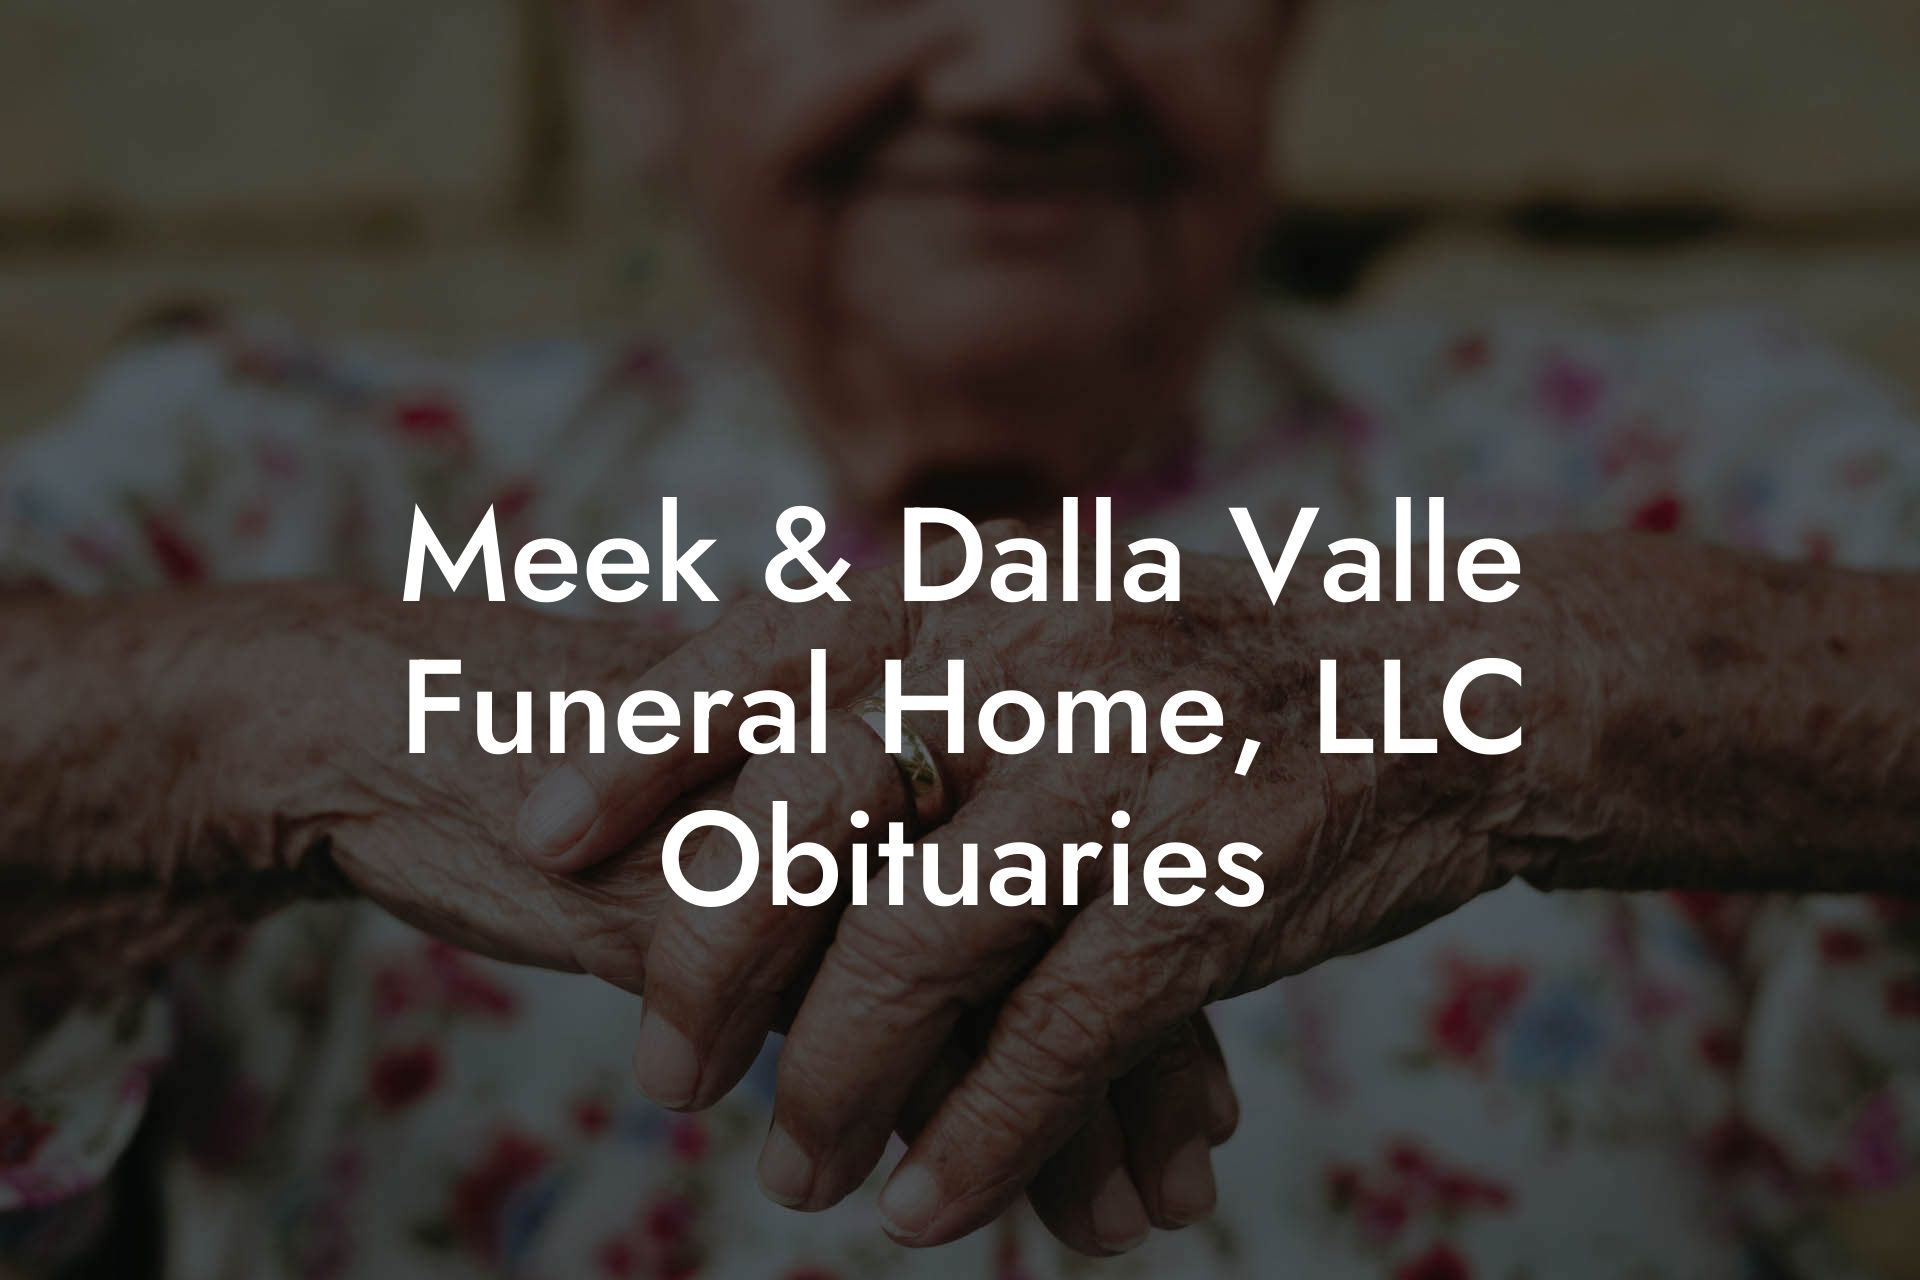 Meek & Dalla Valle Funeral Home, LLC Obituaries